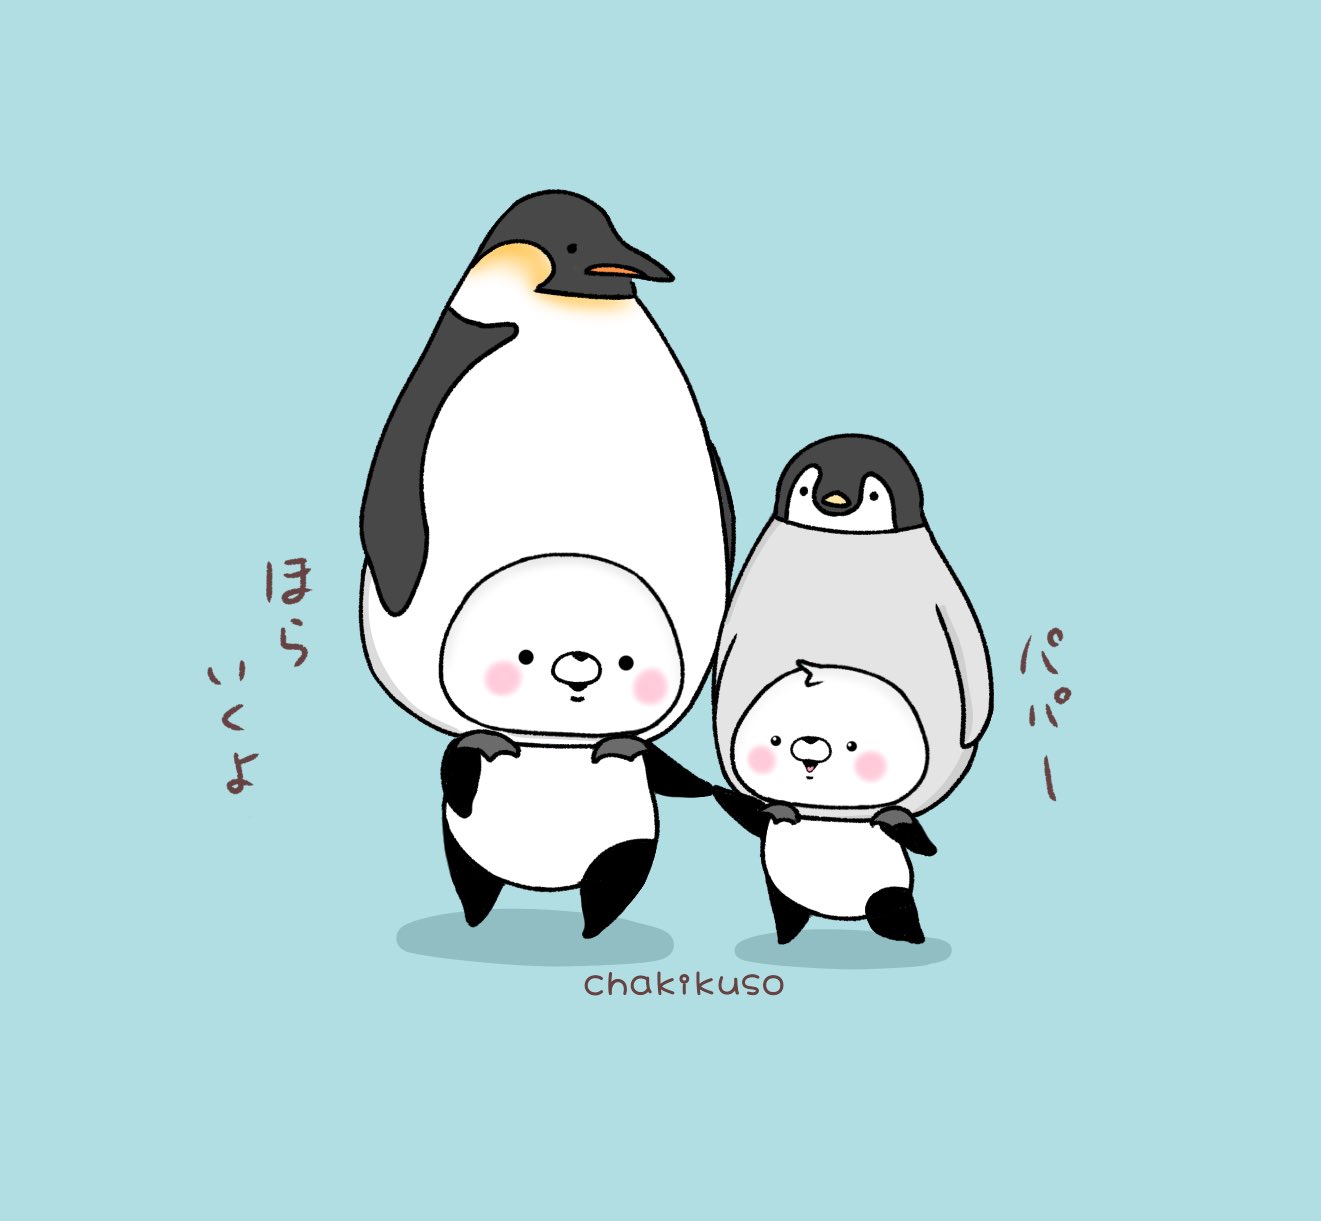 Chakikuso ペンギンの親子 こころにパンダ イラスト ペンギン T Co Twxo4zcxju Twitter